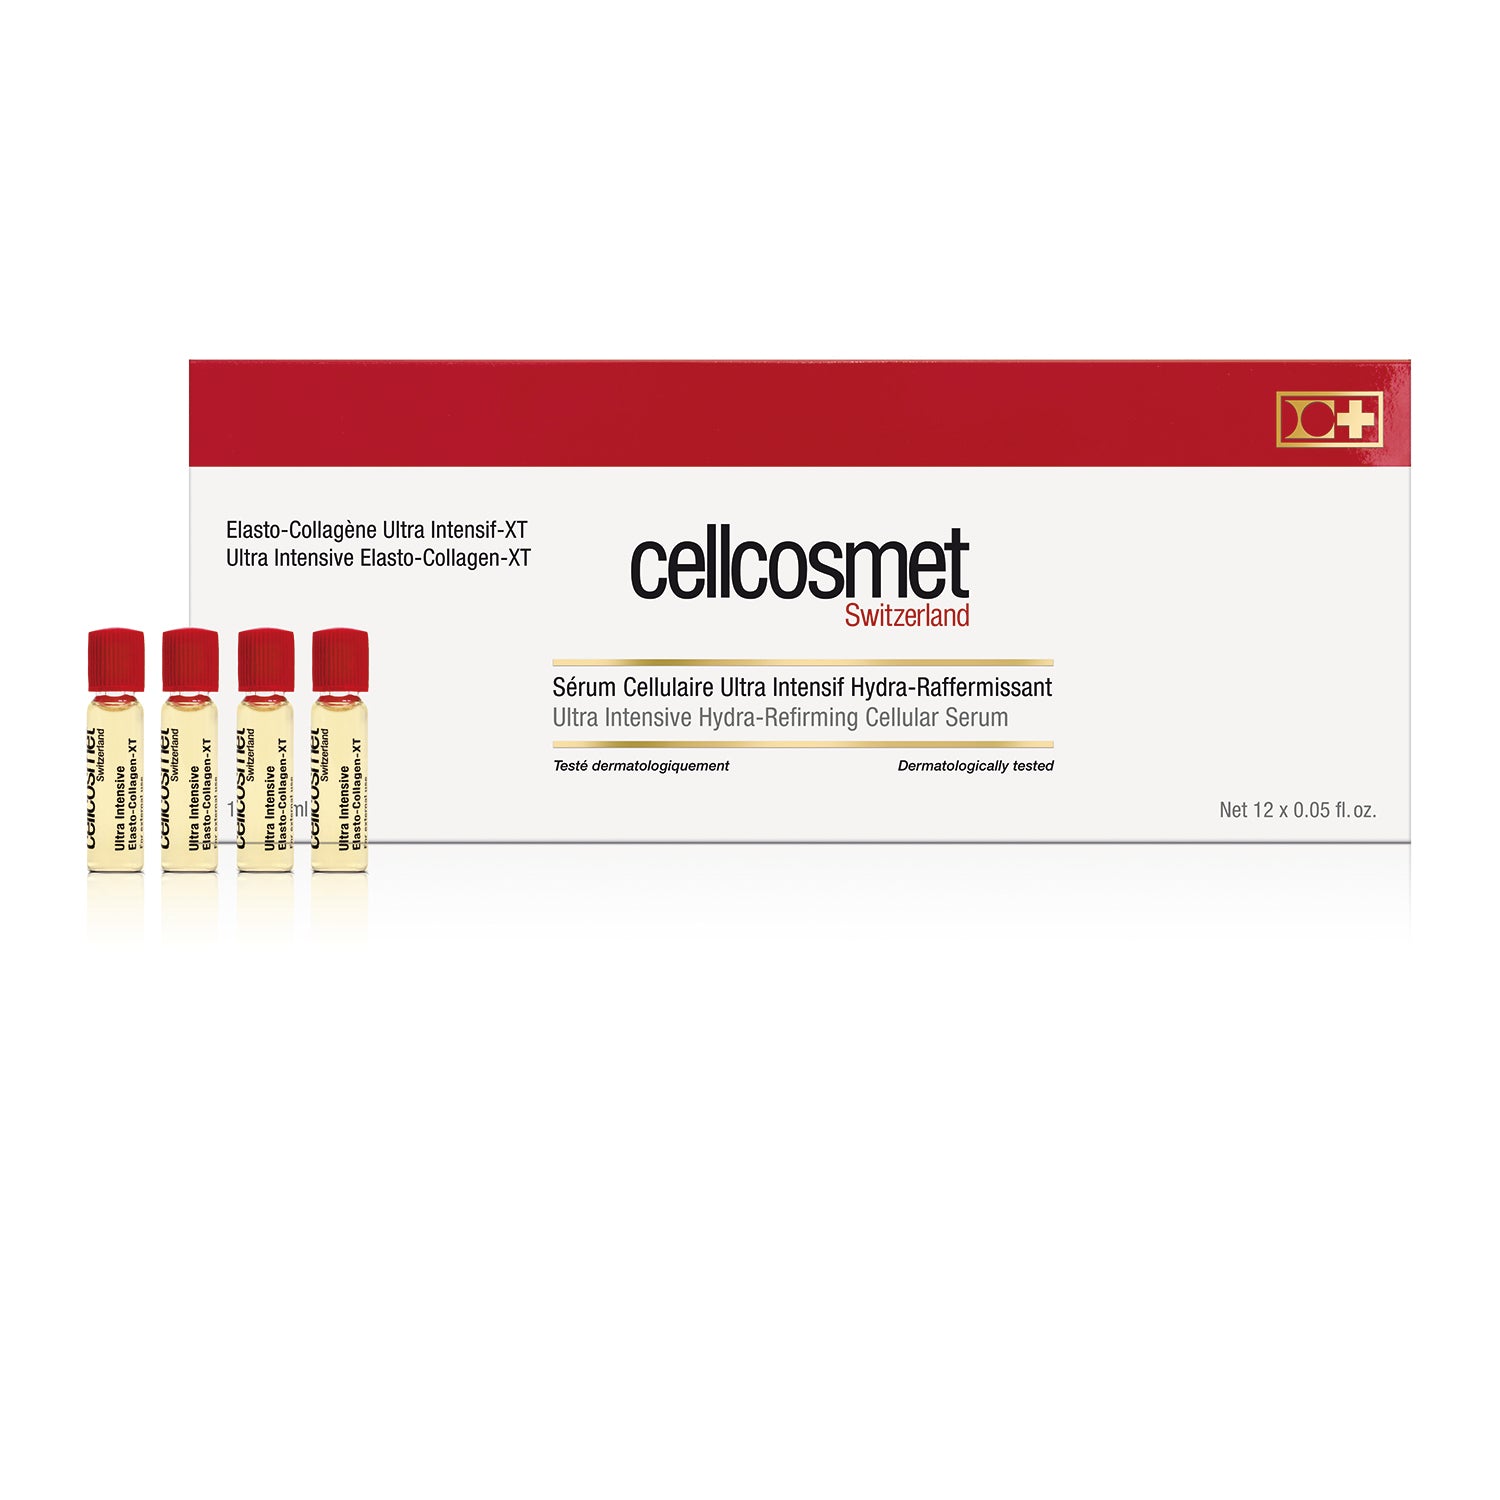 Cellcosmet Ultra Intensive Elasto-Collagen-XT